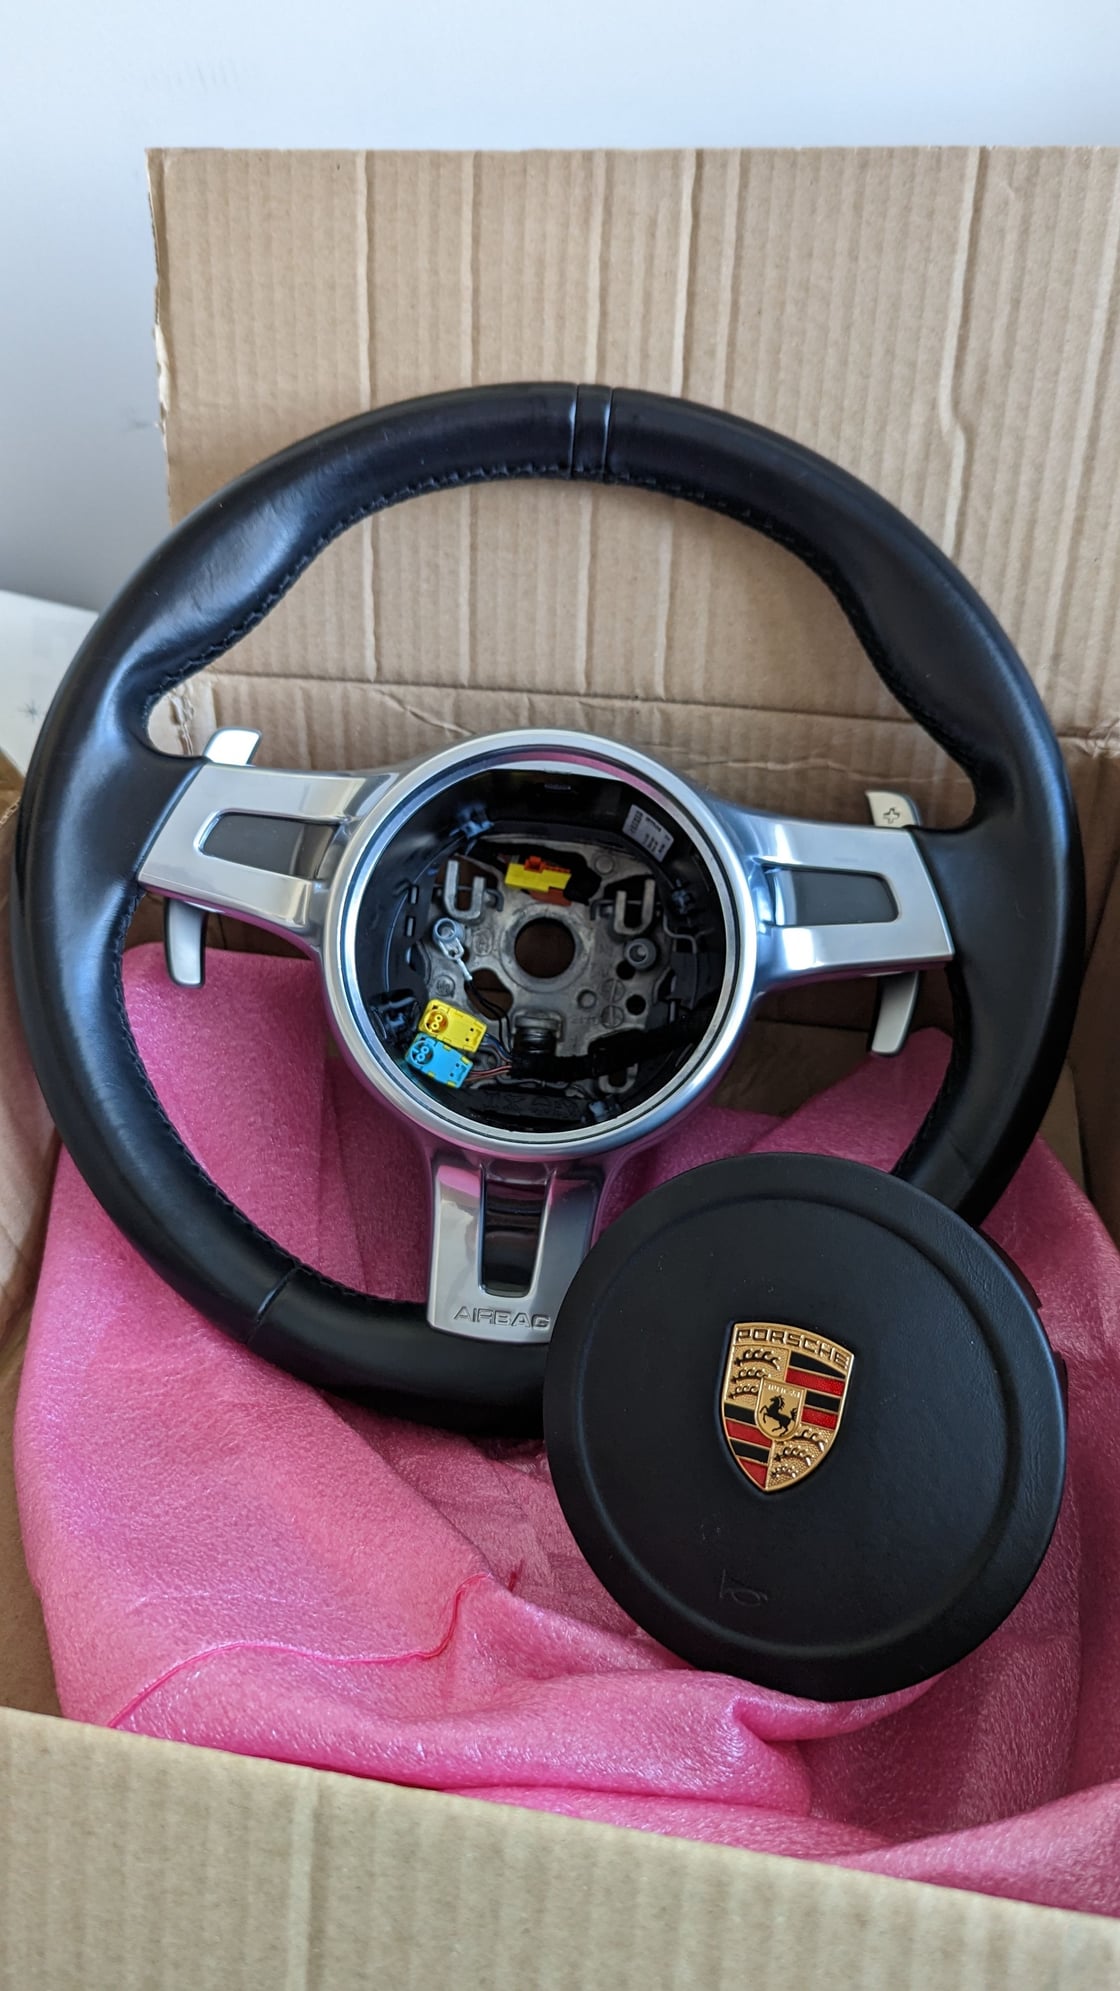 2015 Porsche 911 - 991.1 Sport Design Steering wheel , Clock Spring, & Airbag - Accessories - $1,600 - Atlanta, GA 30306, United States